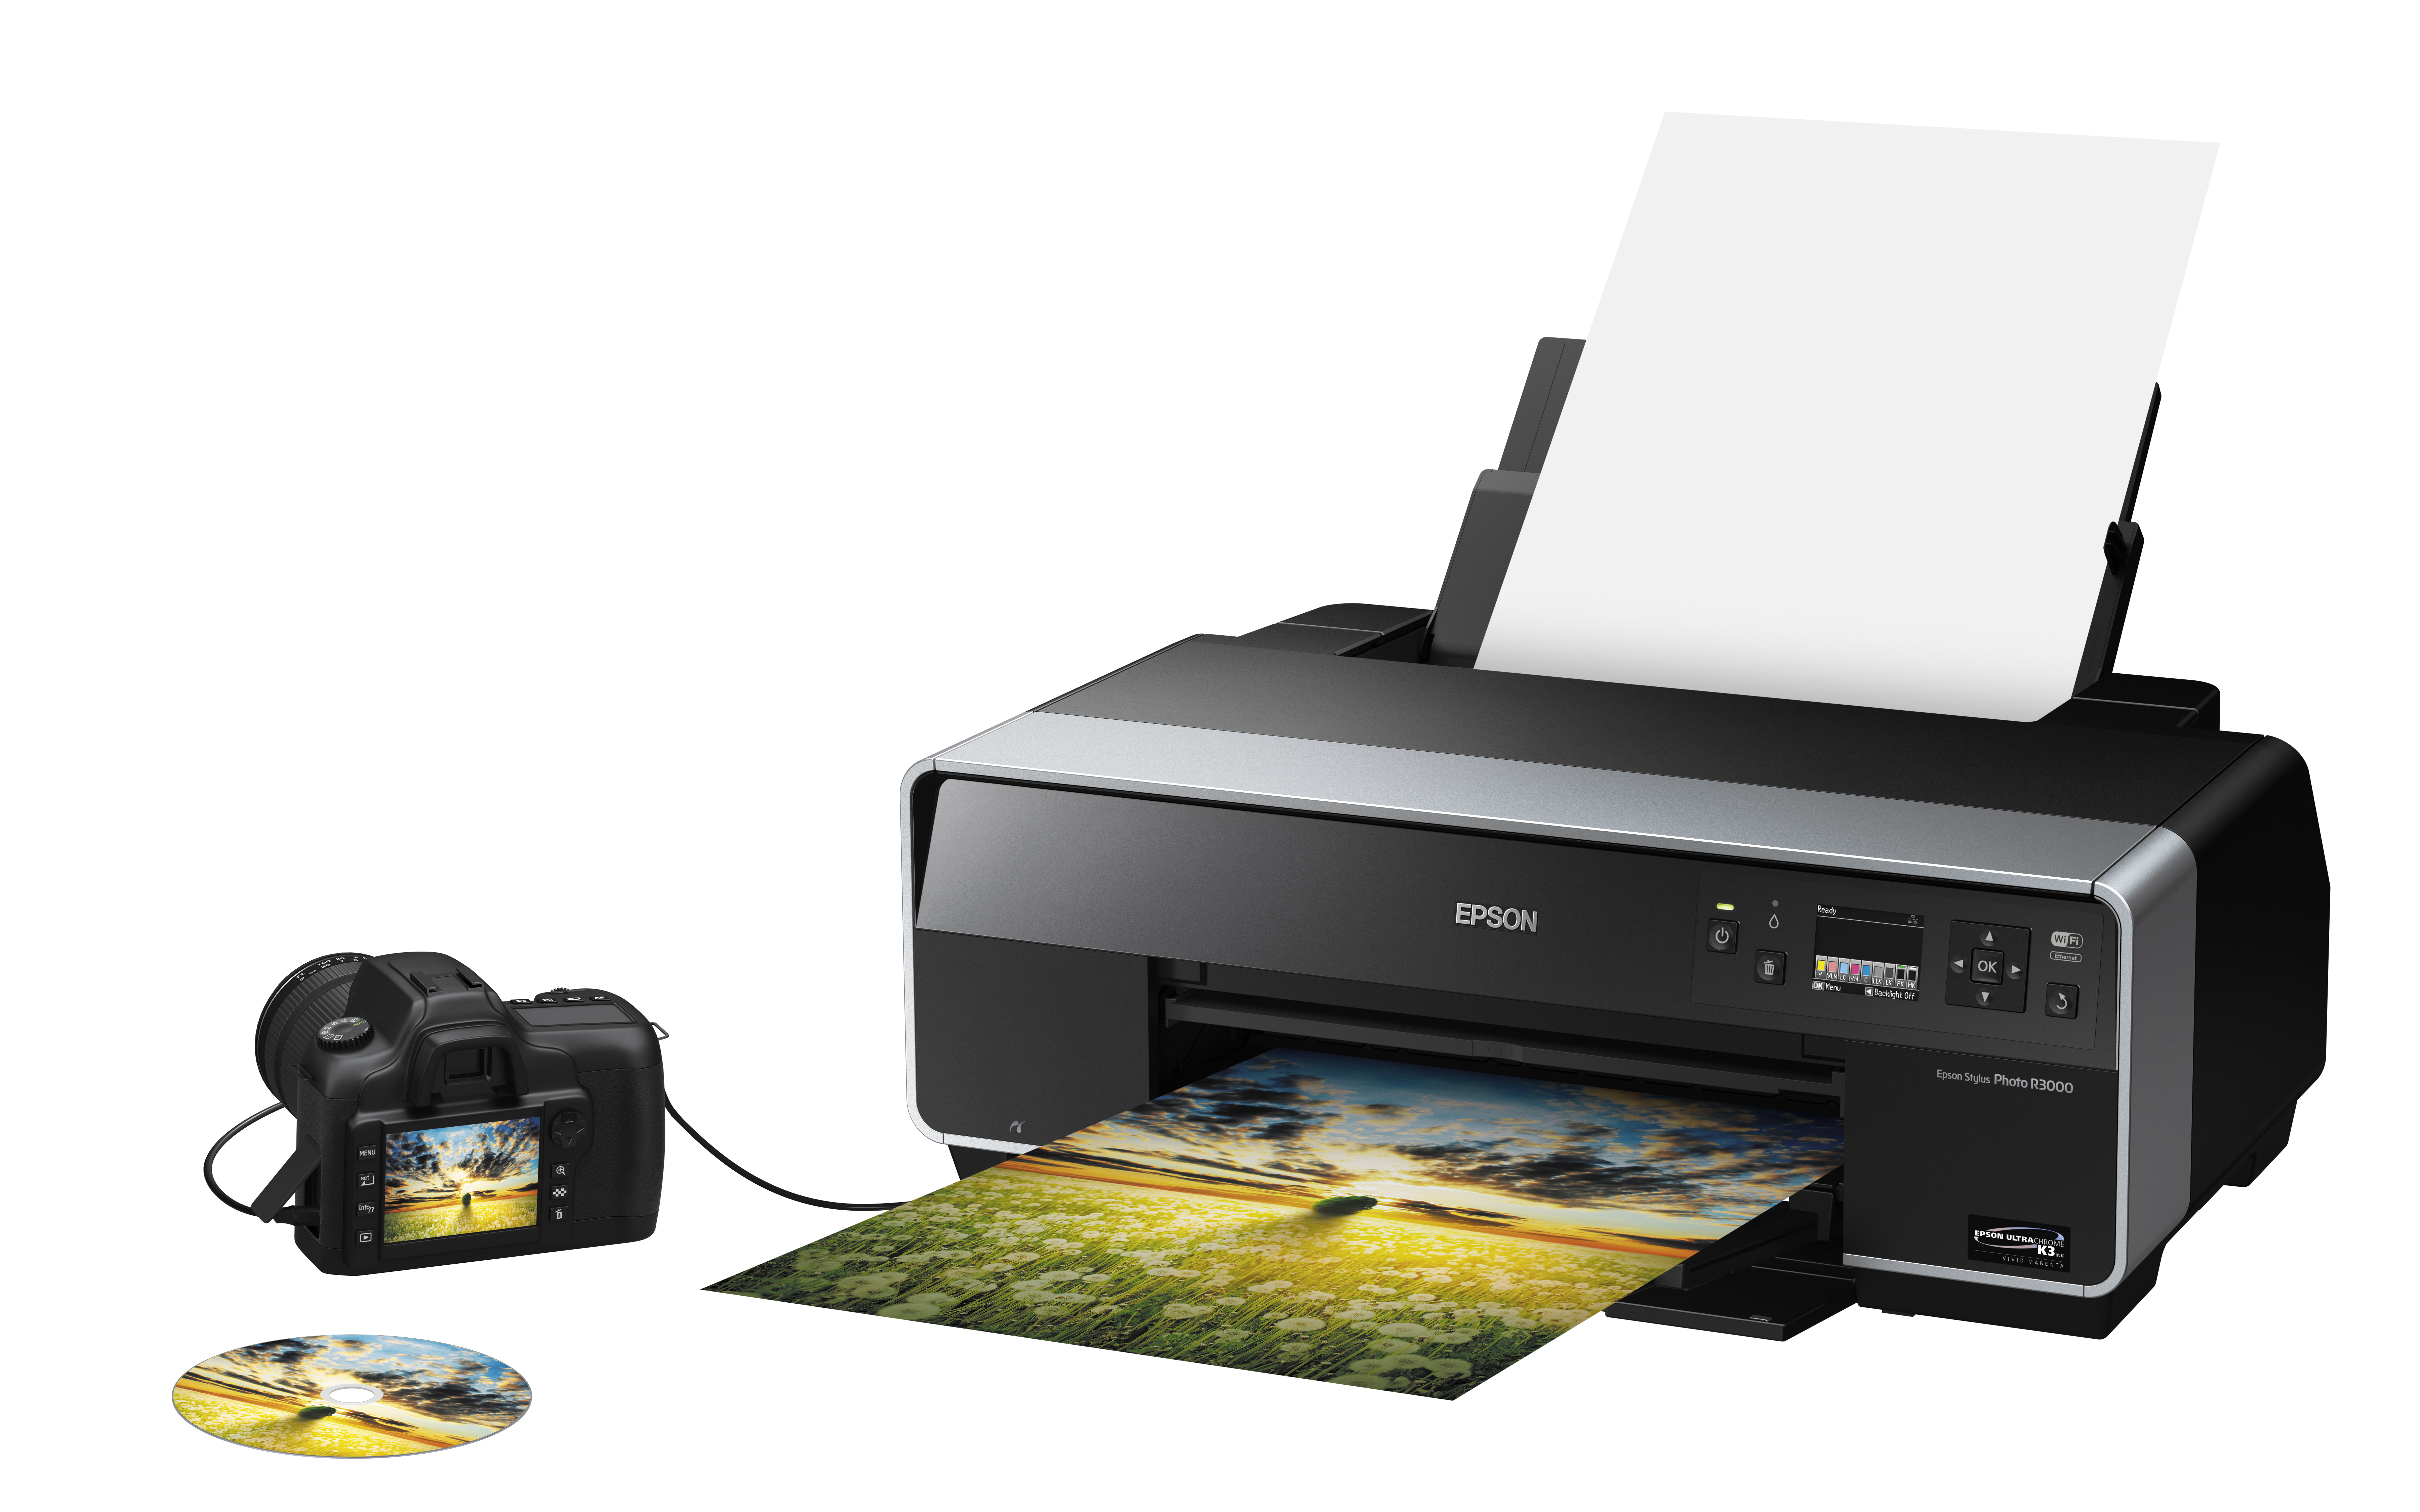 R3000 printer